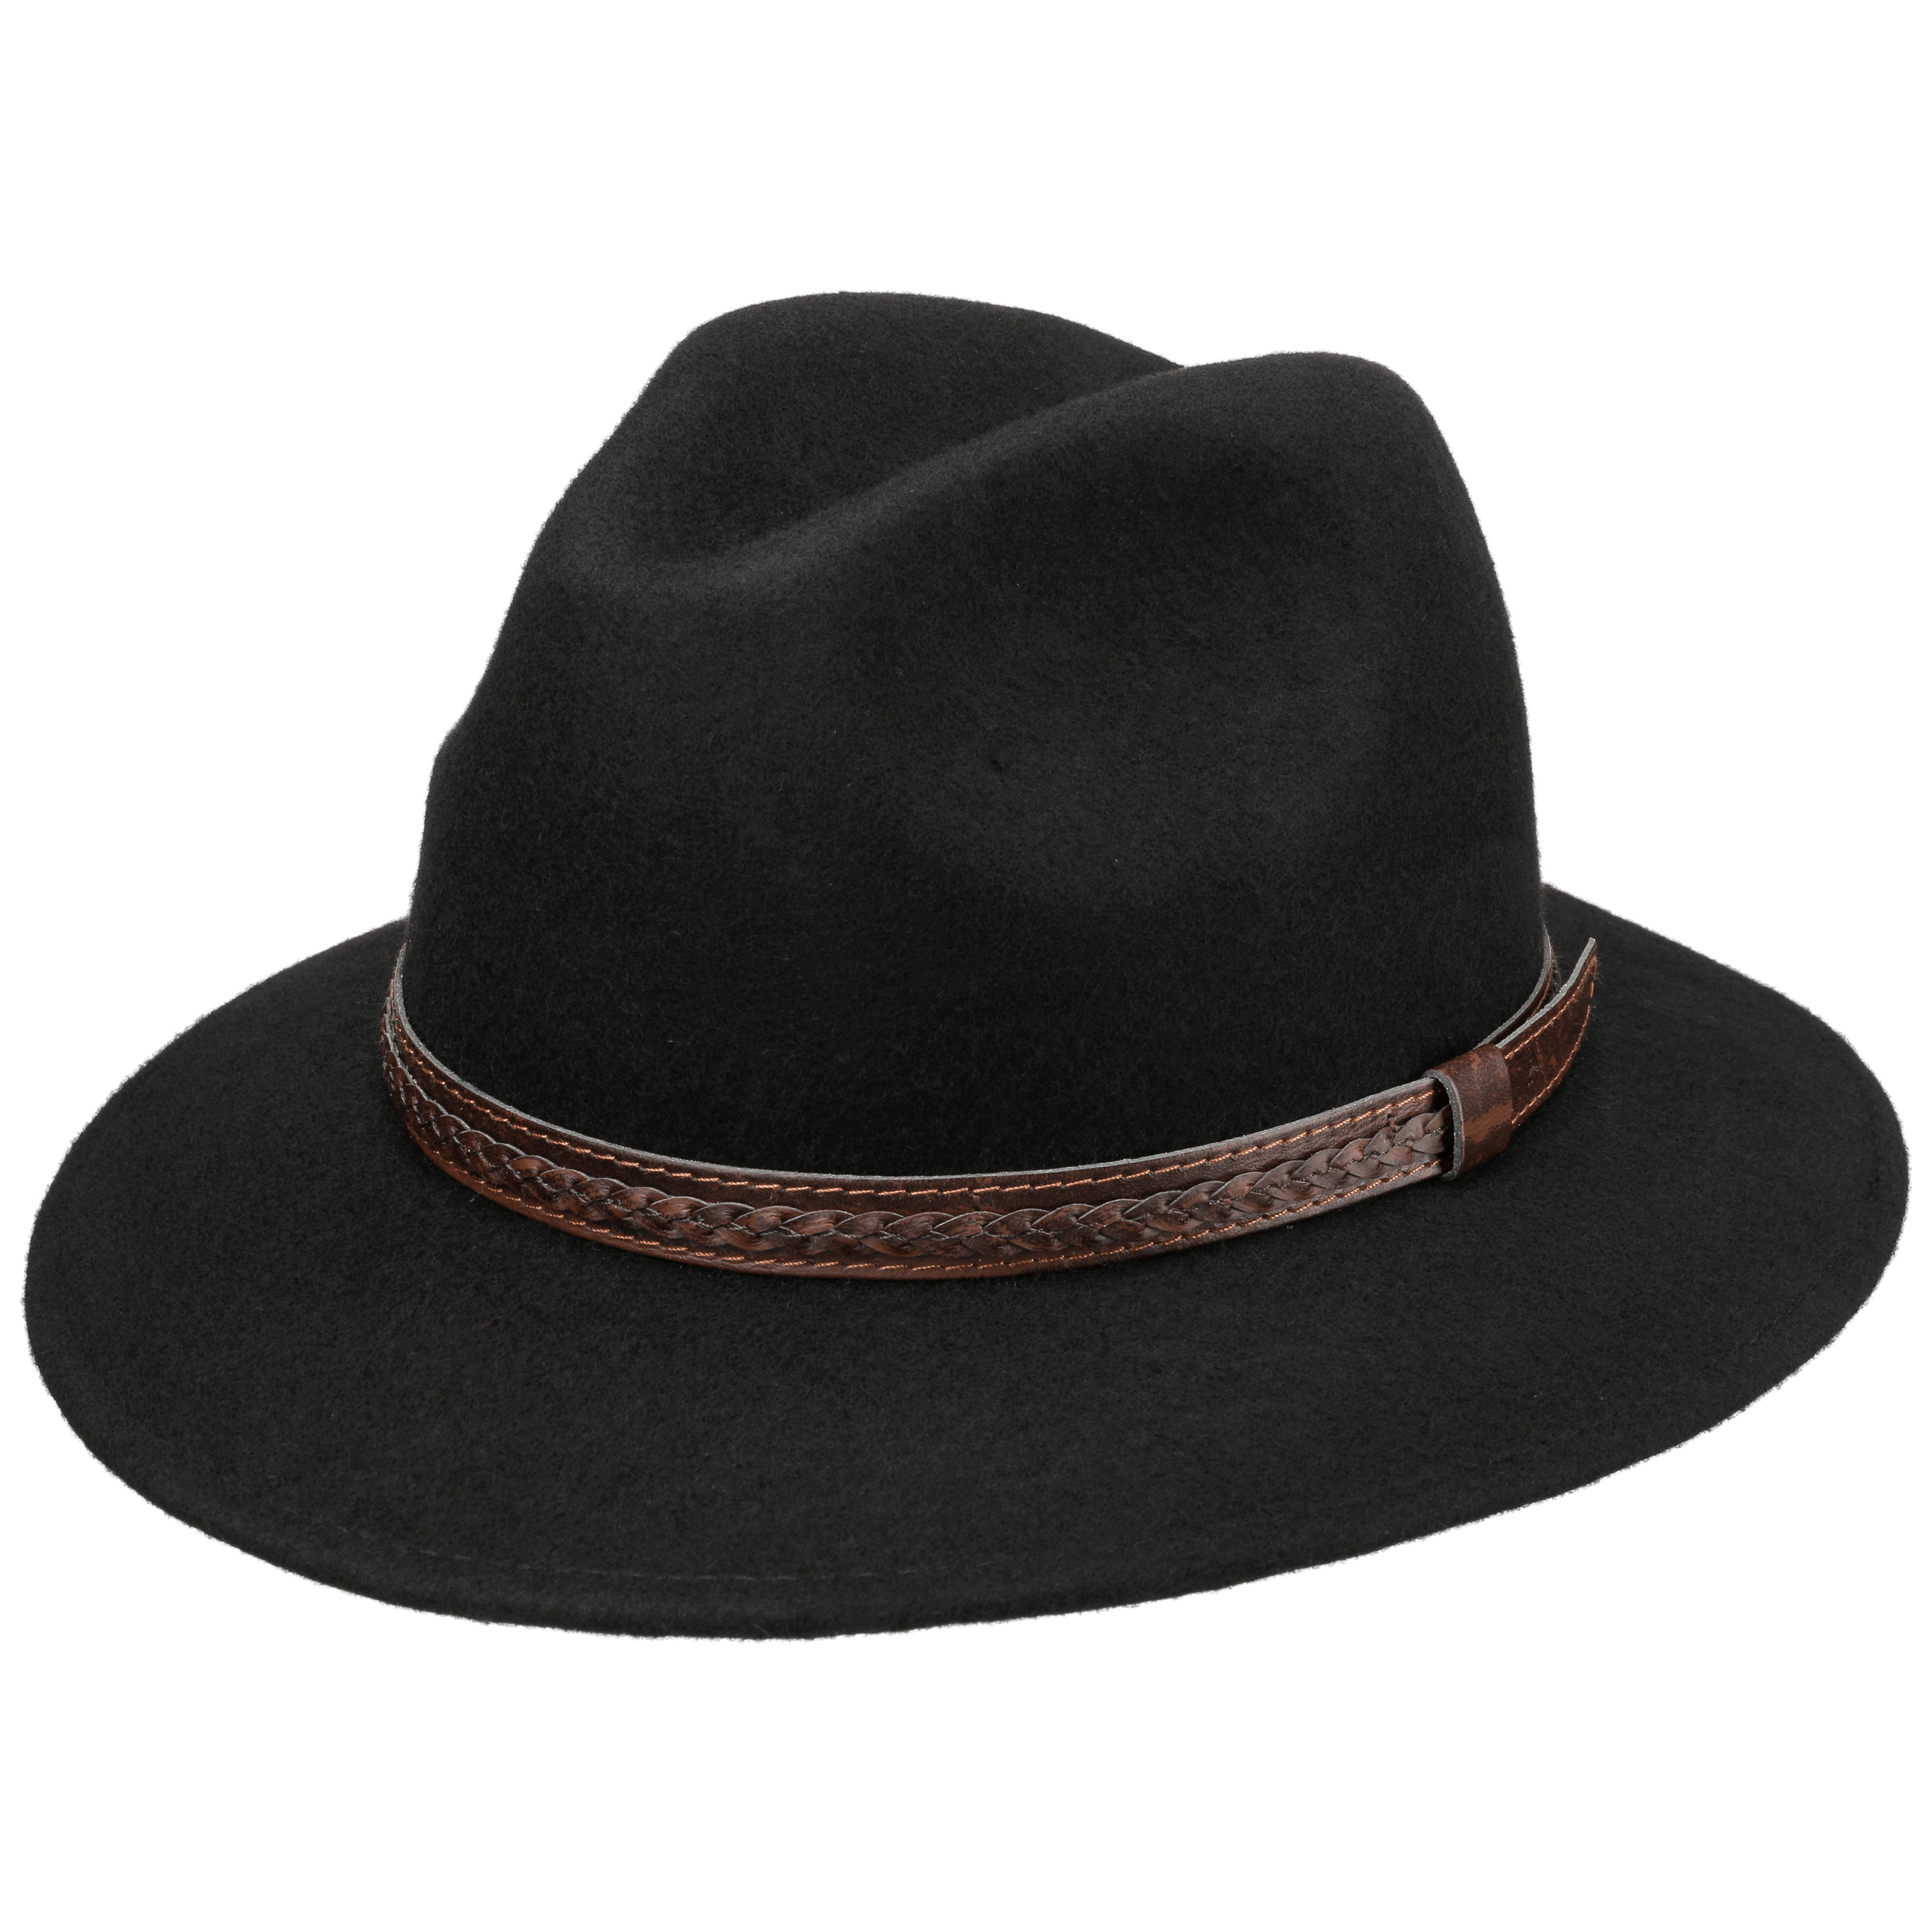 black wool hat